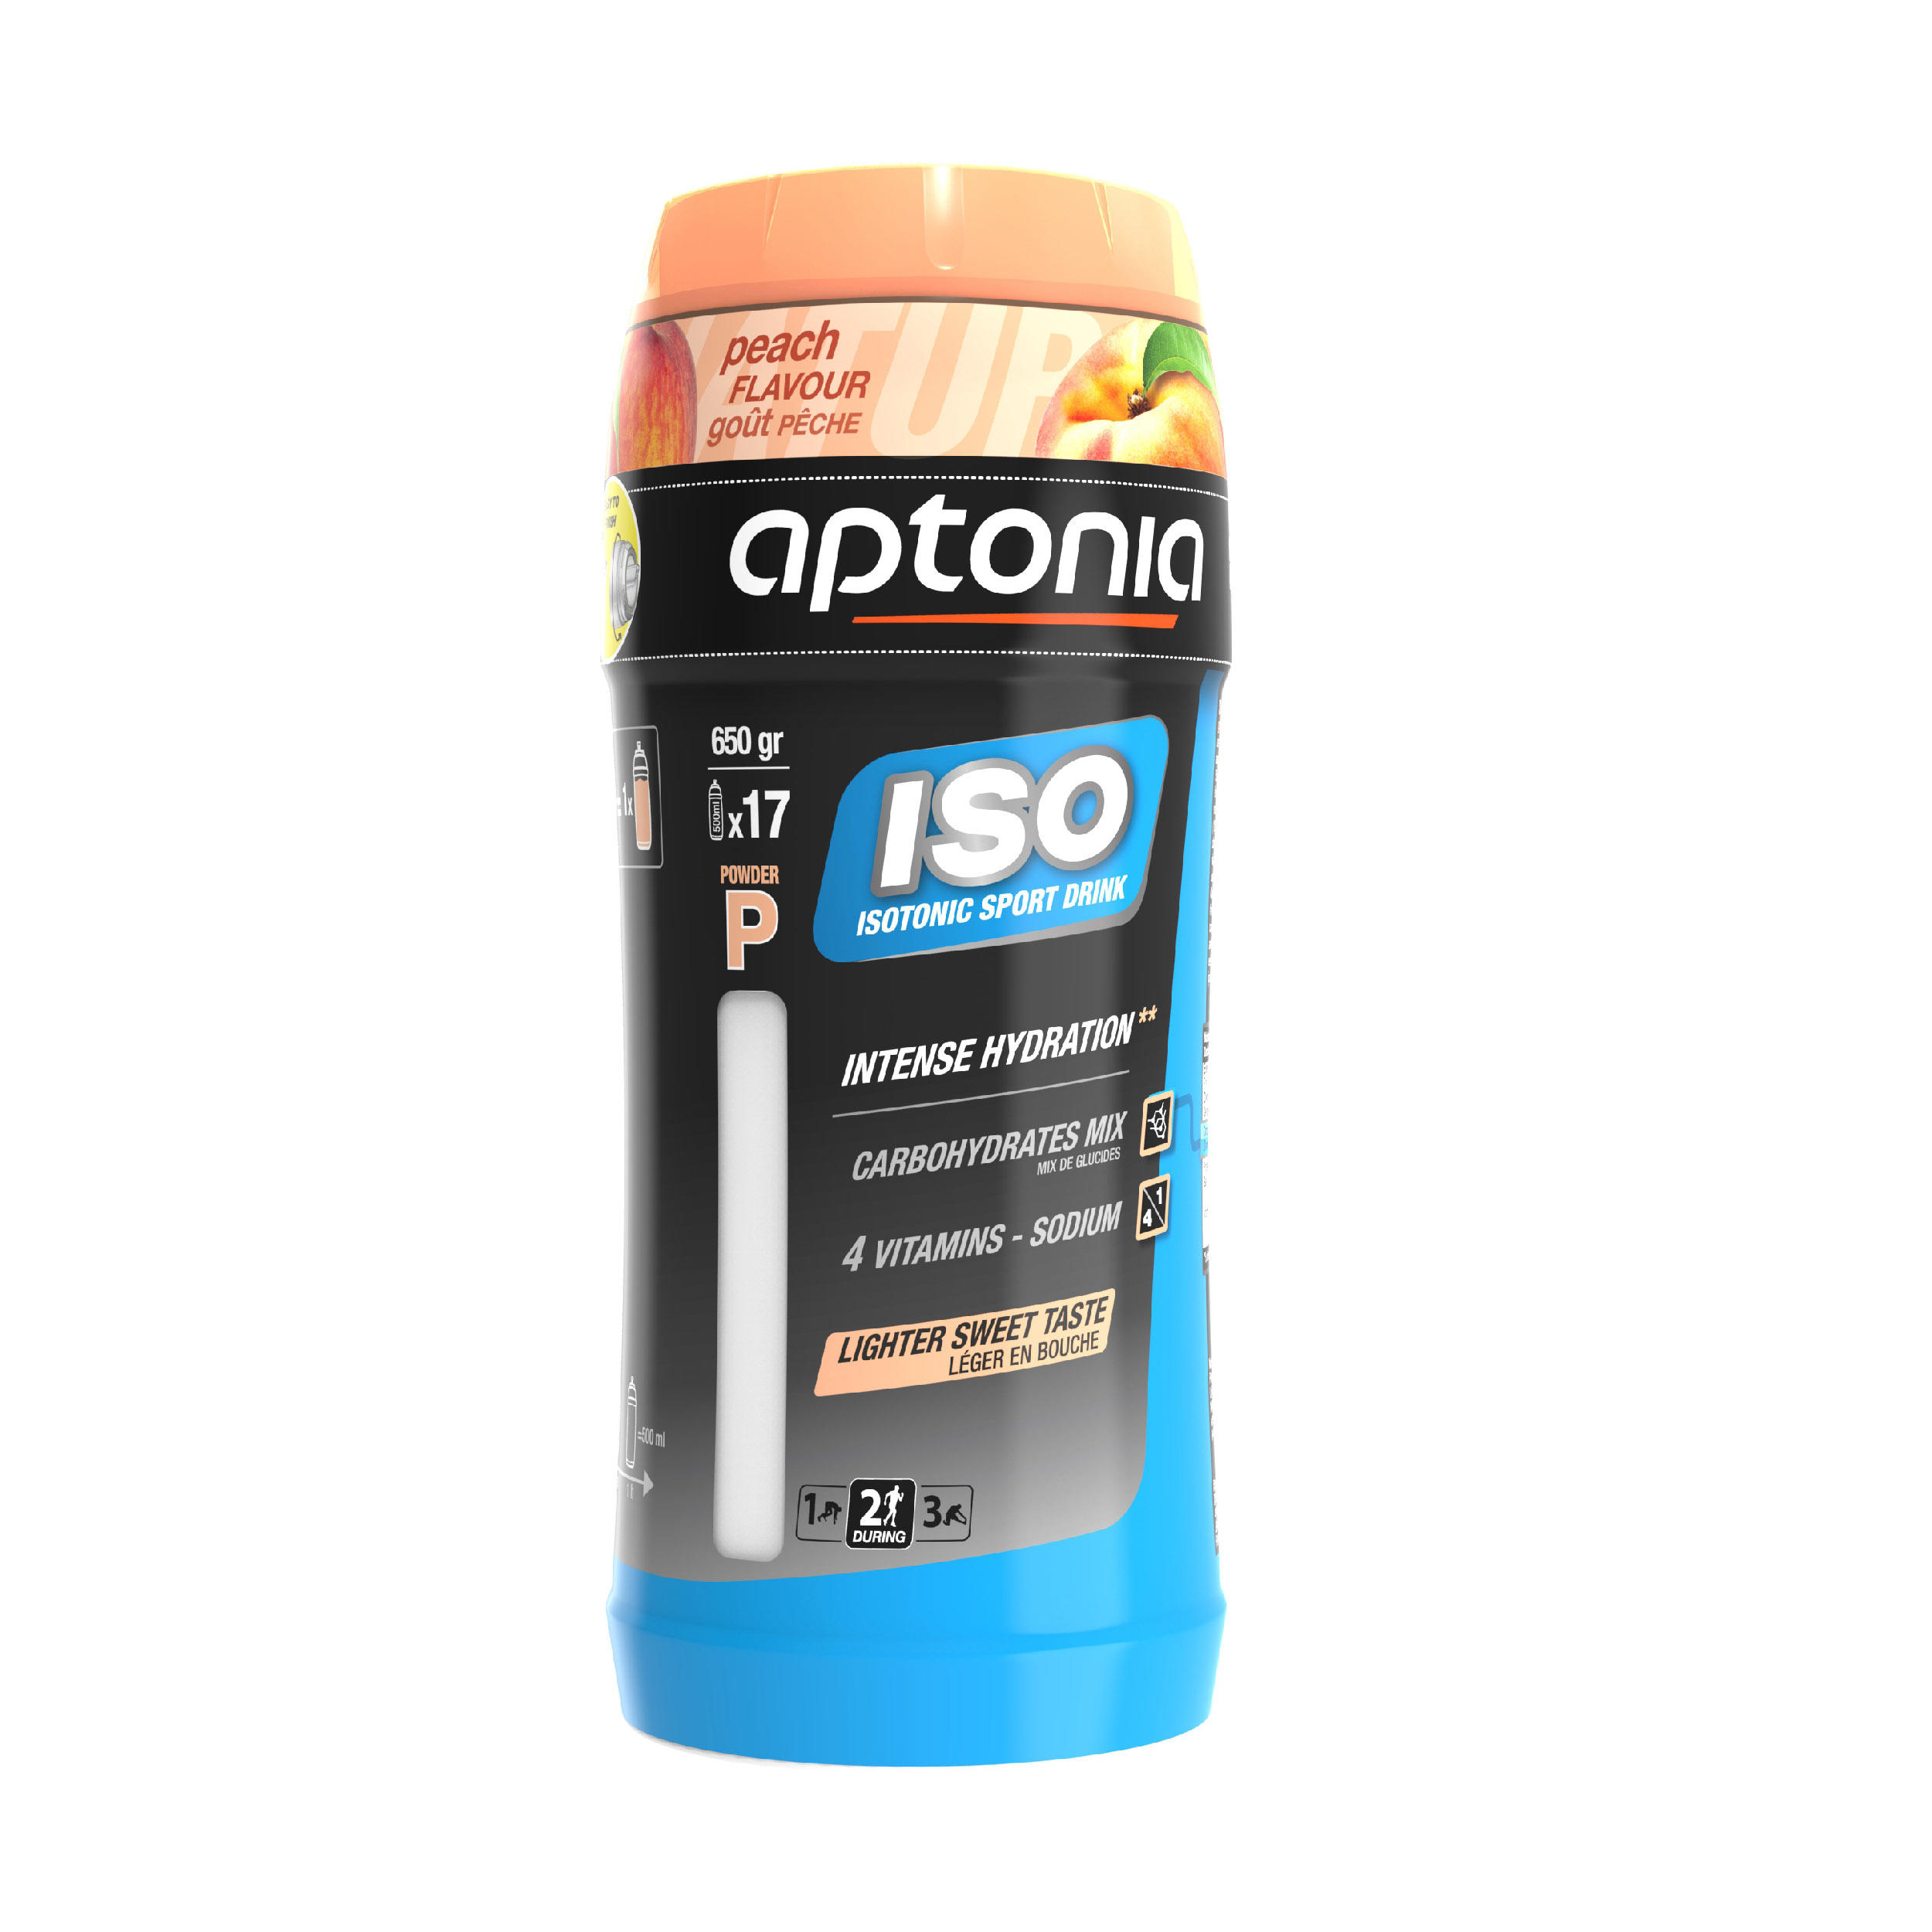 APTONIA ISO Isotonic Drink Powder 650g - Peach